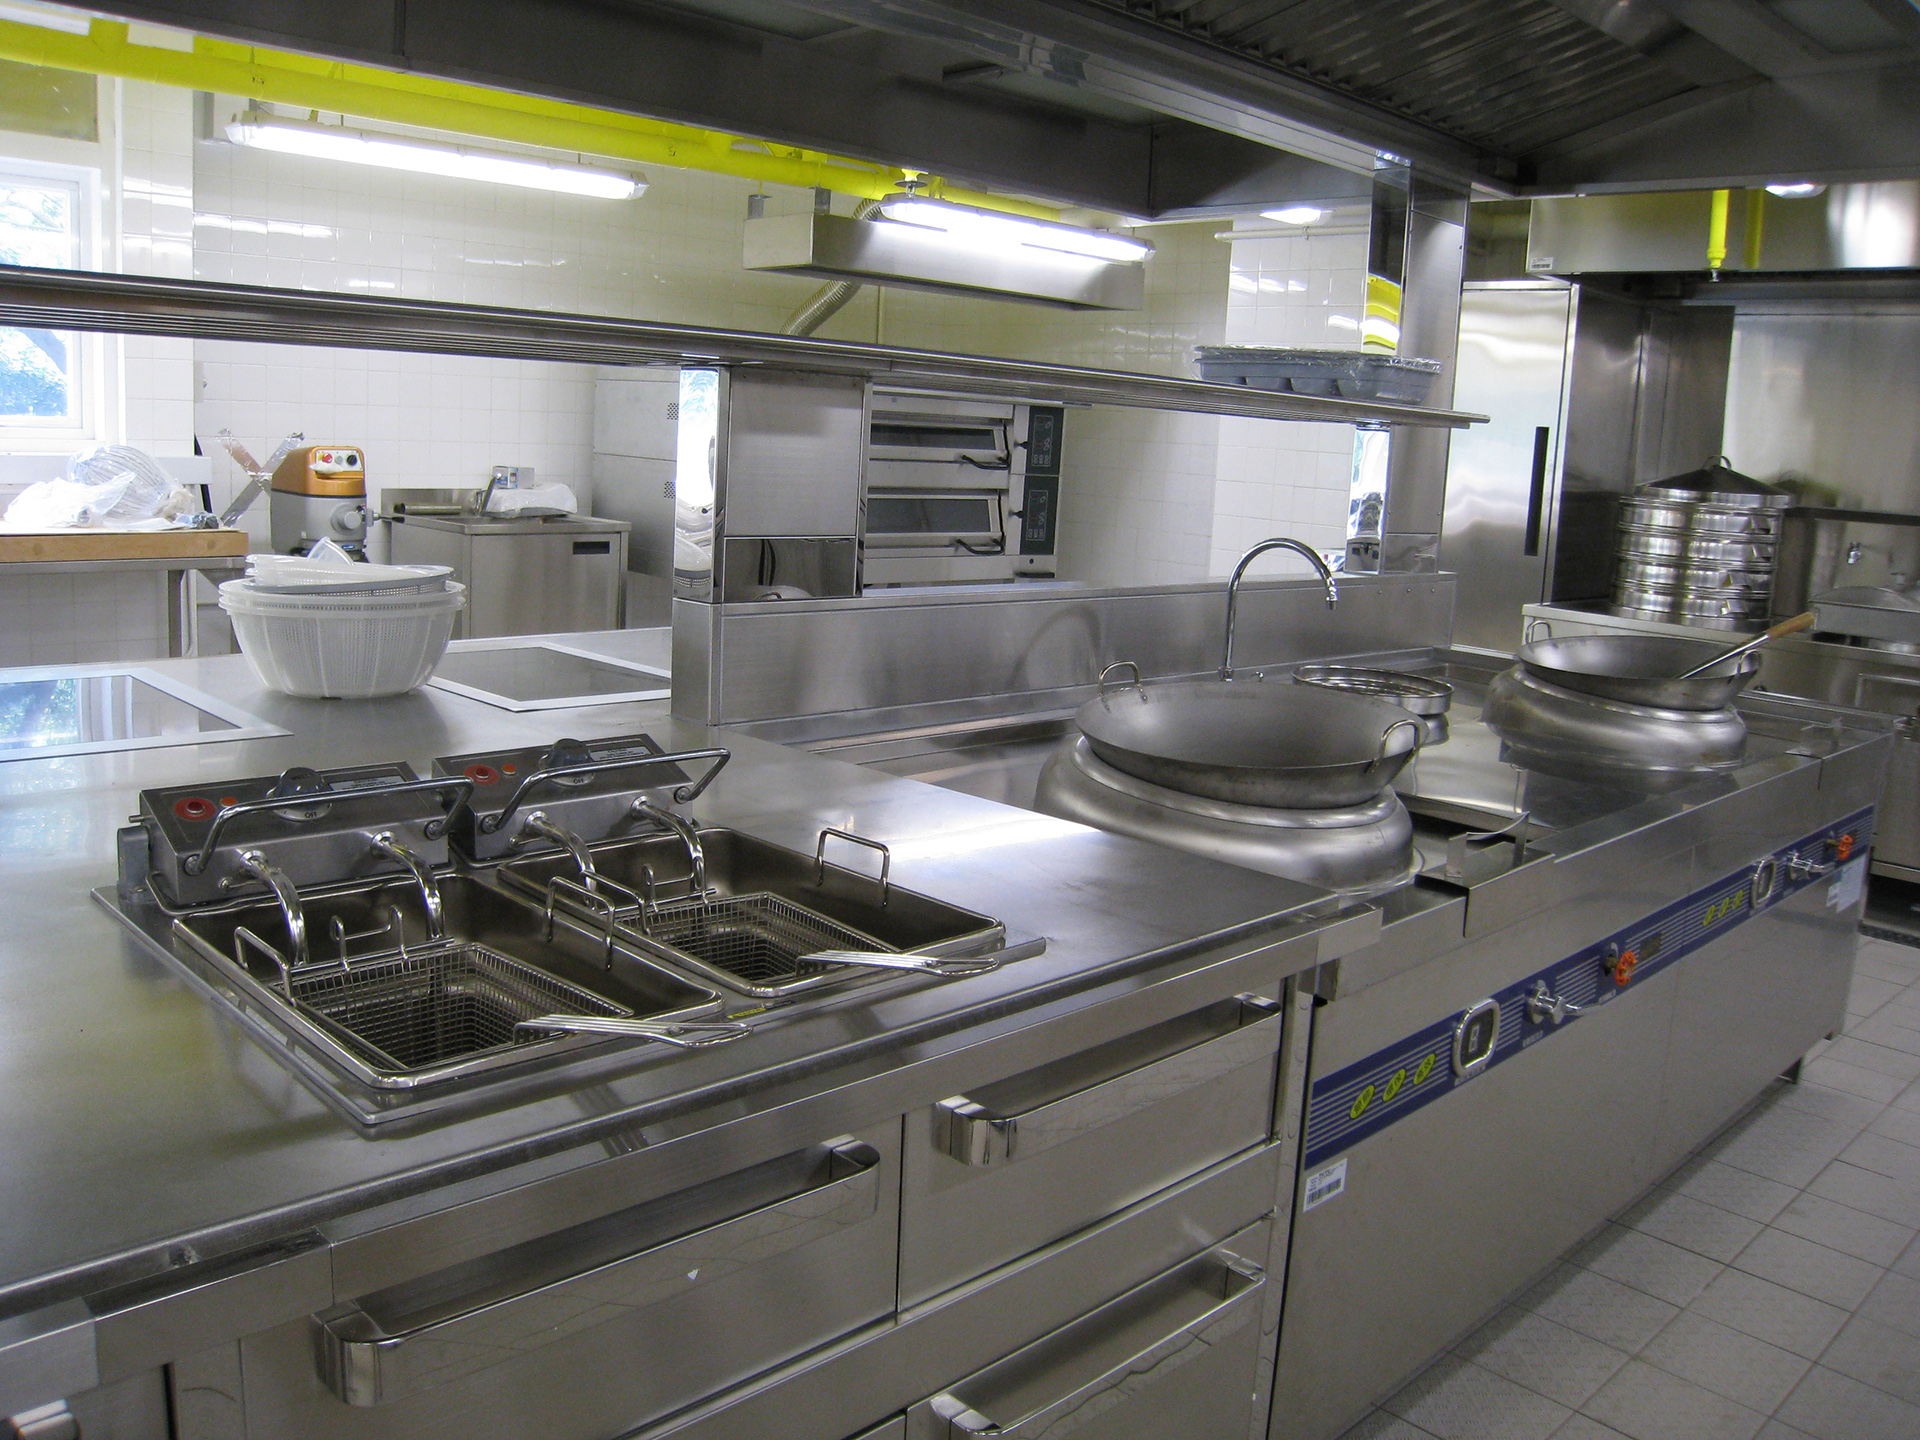 IVDC于屯门新设的训练厨房达商业用厨房标准